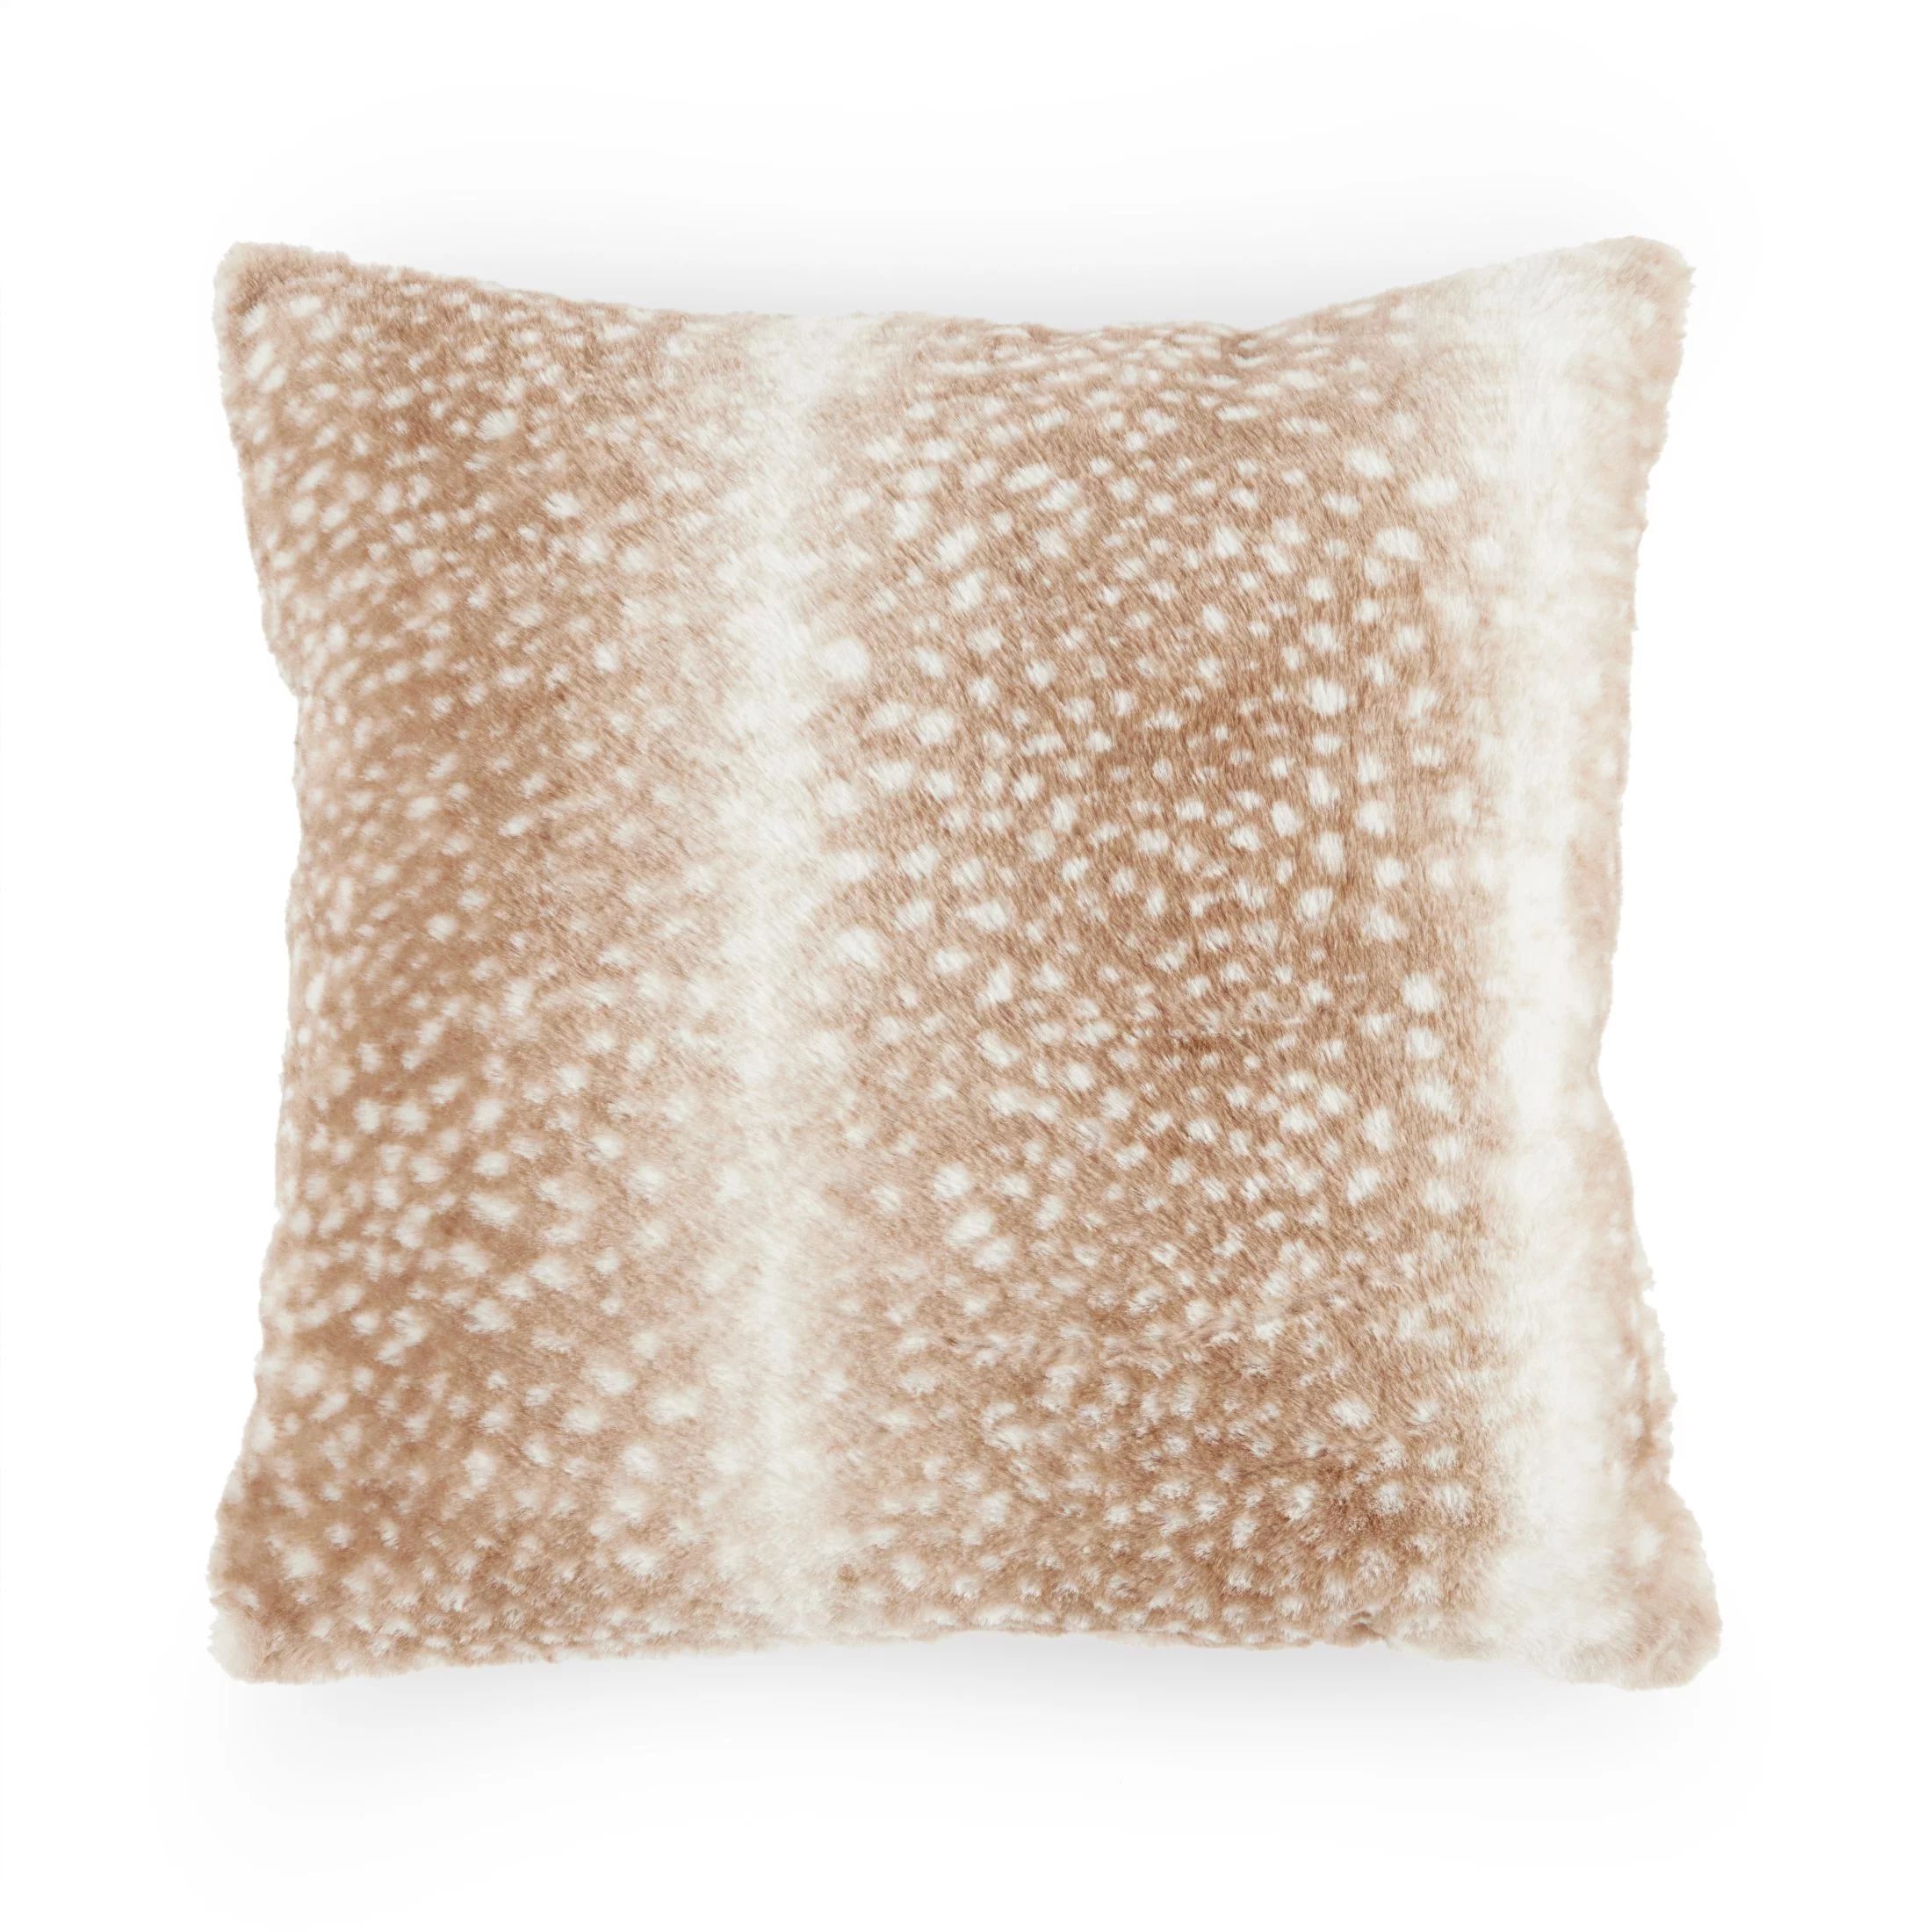 Wanda June Home Faux Fur Pillow, Multi-color, 20"x20", 1 Piece, by Miranda Lambert | Walmart (US)